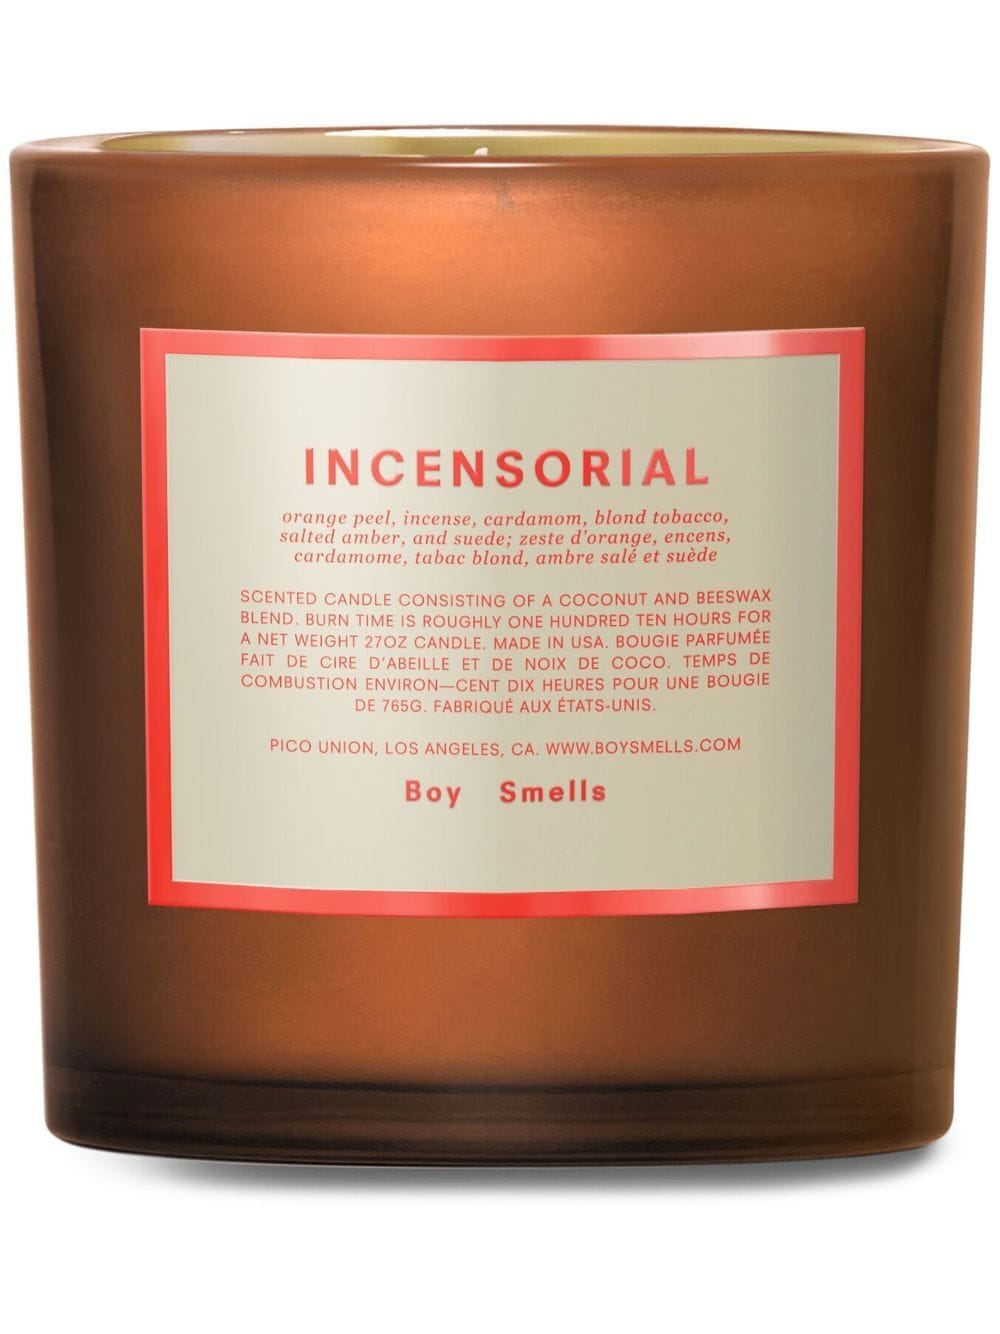 Boy Smells Holiday 22 Incensorial candle - Orange von Boy Smells